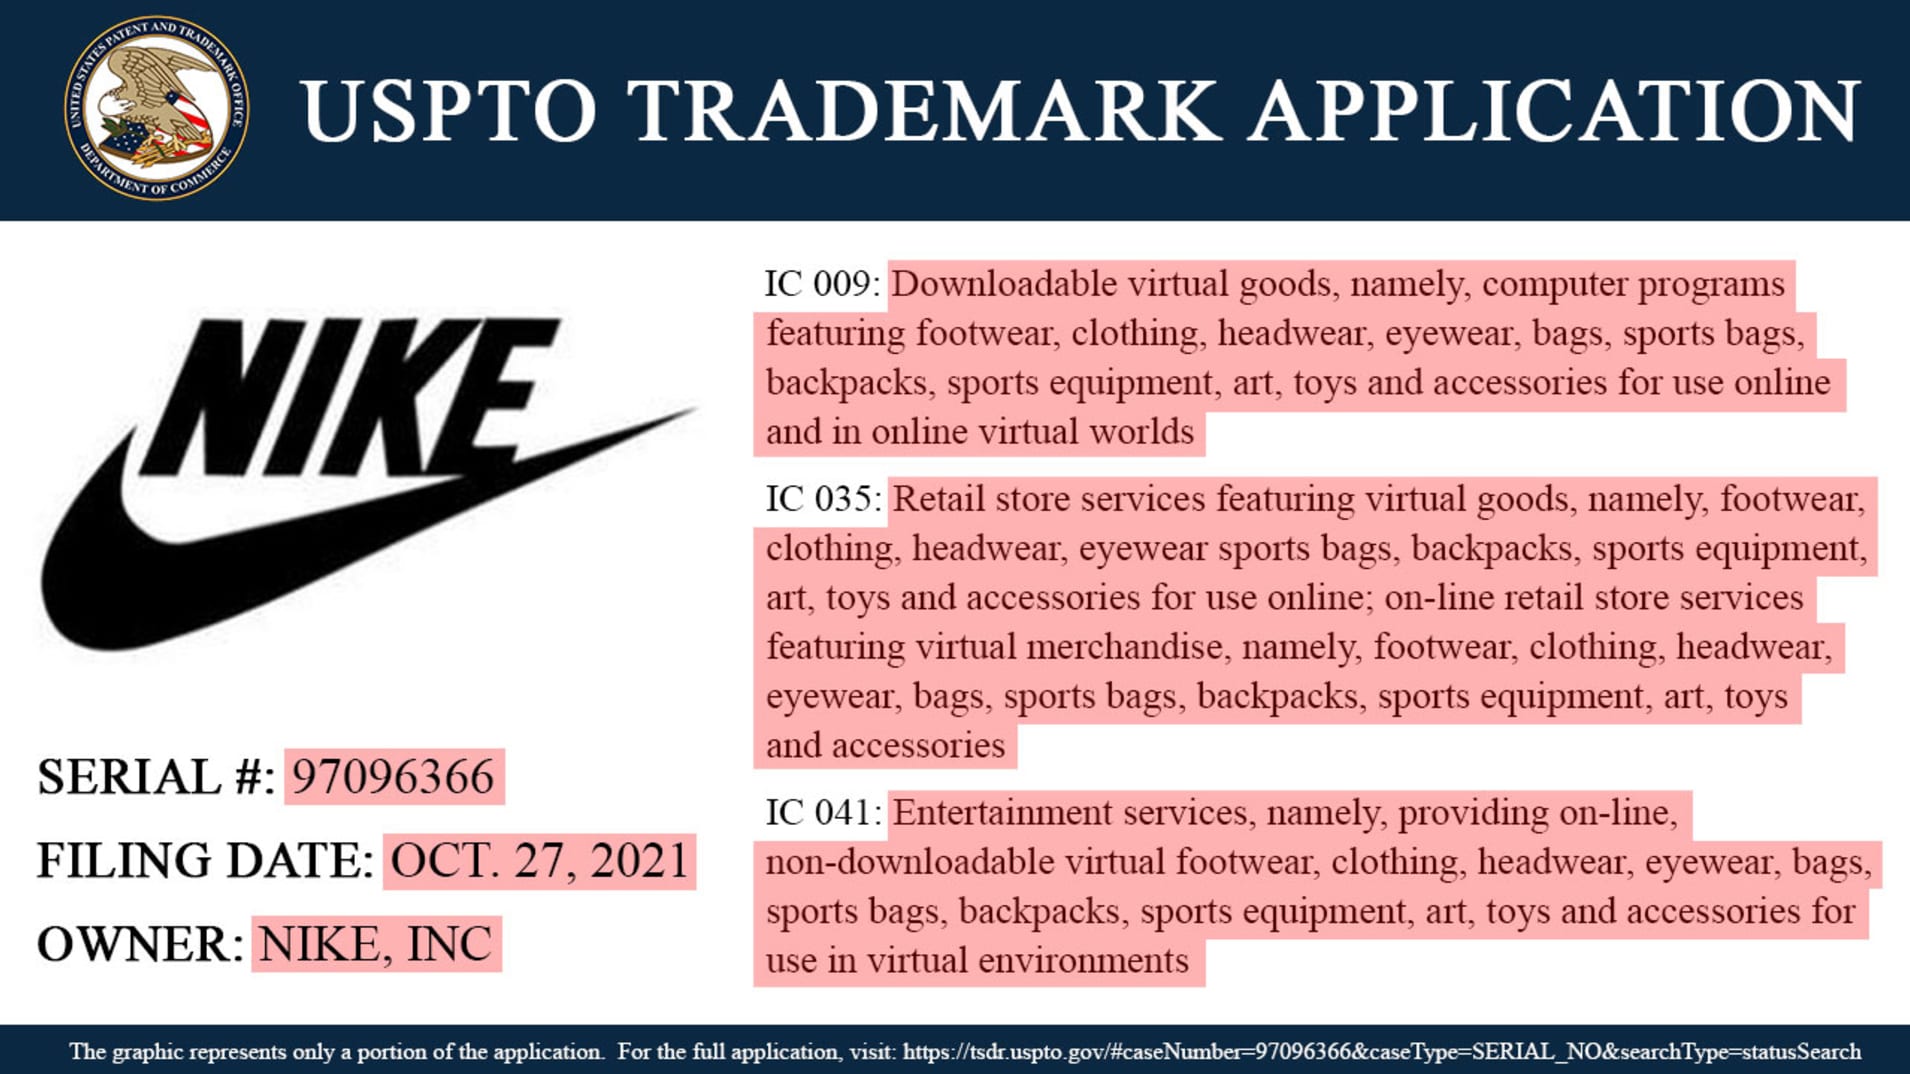 Nike申请虚拟产品相关商标，并开始公开招聘“虚拟鞋类设计师”